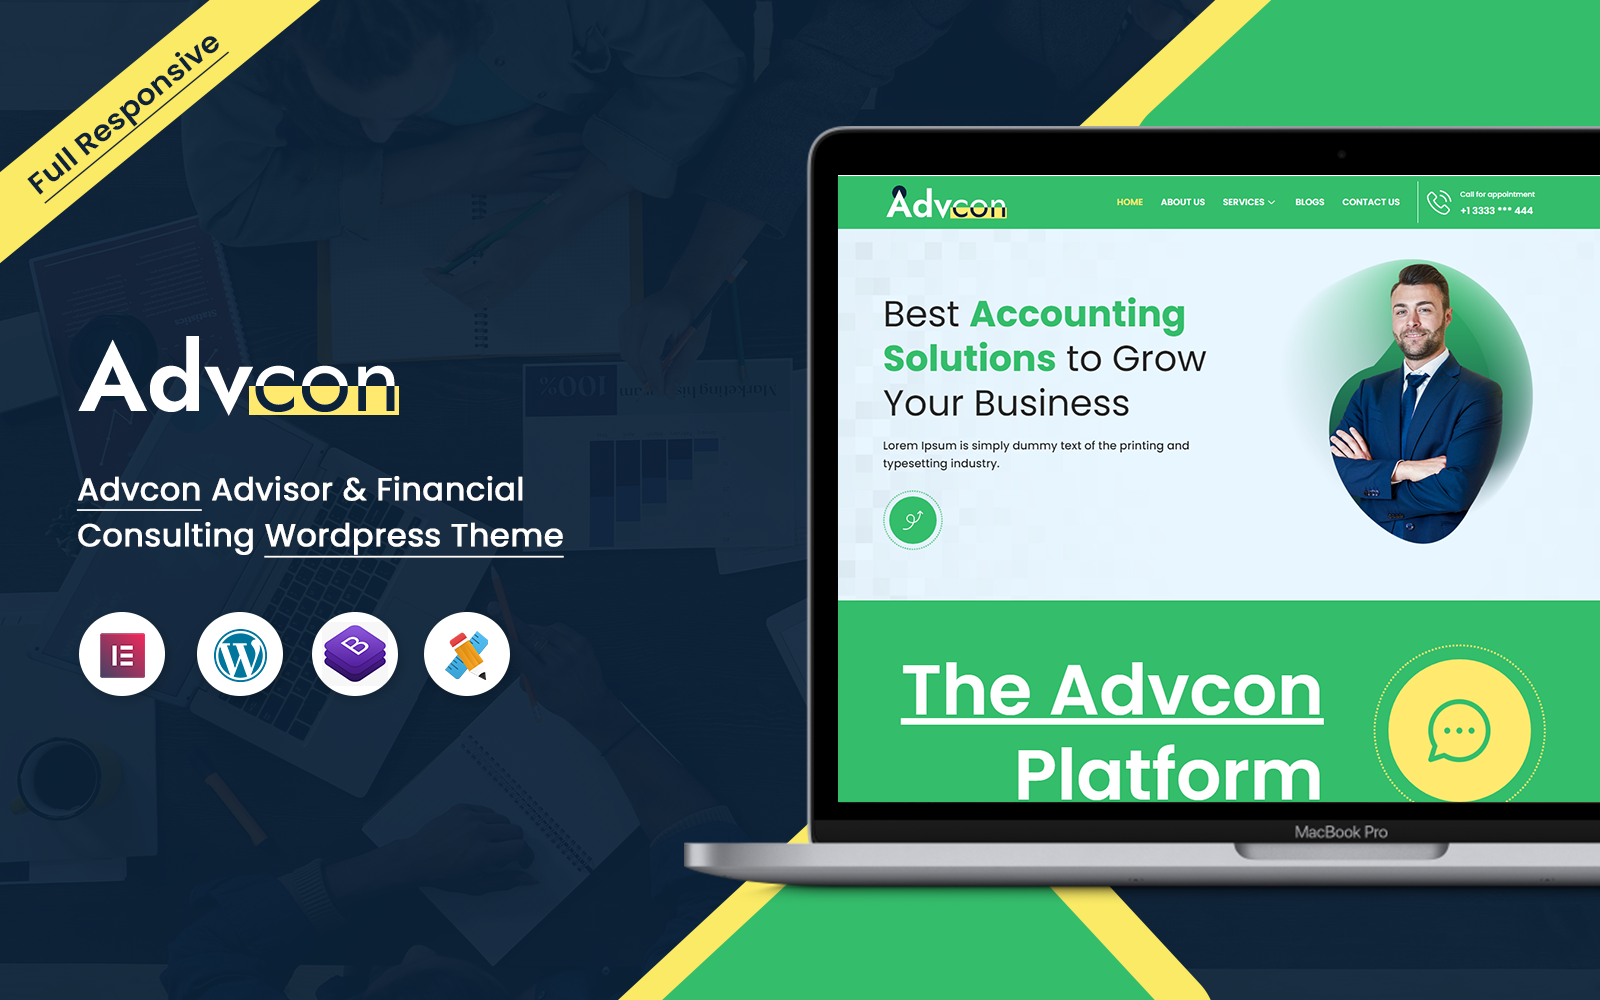 Advcon Advisor & Financial Consulting Wordpress Theme